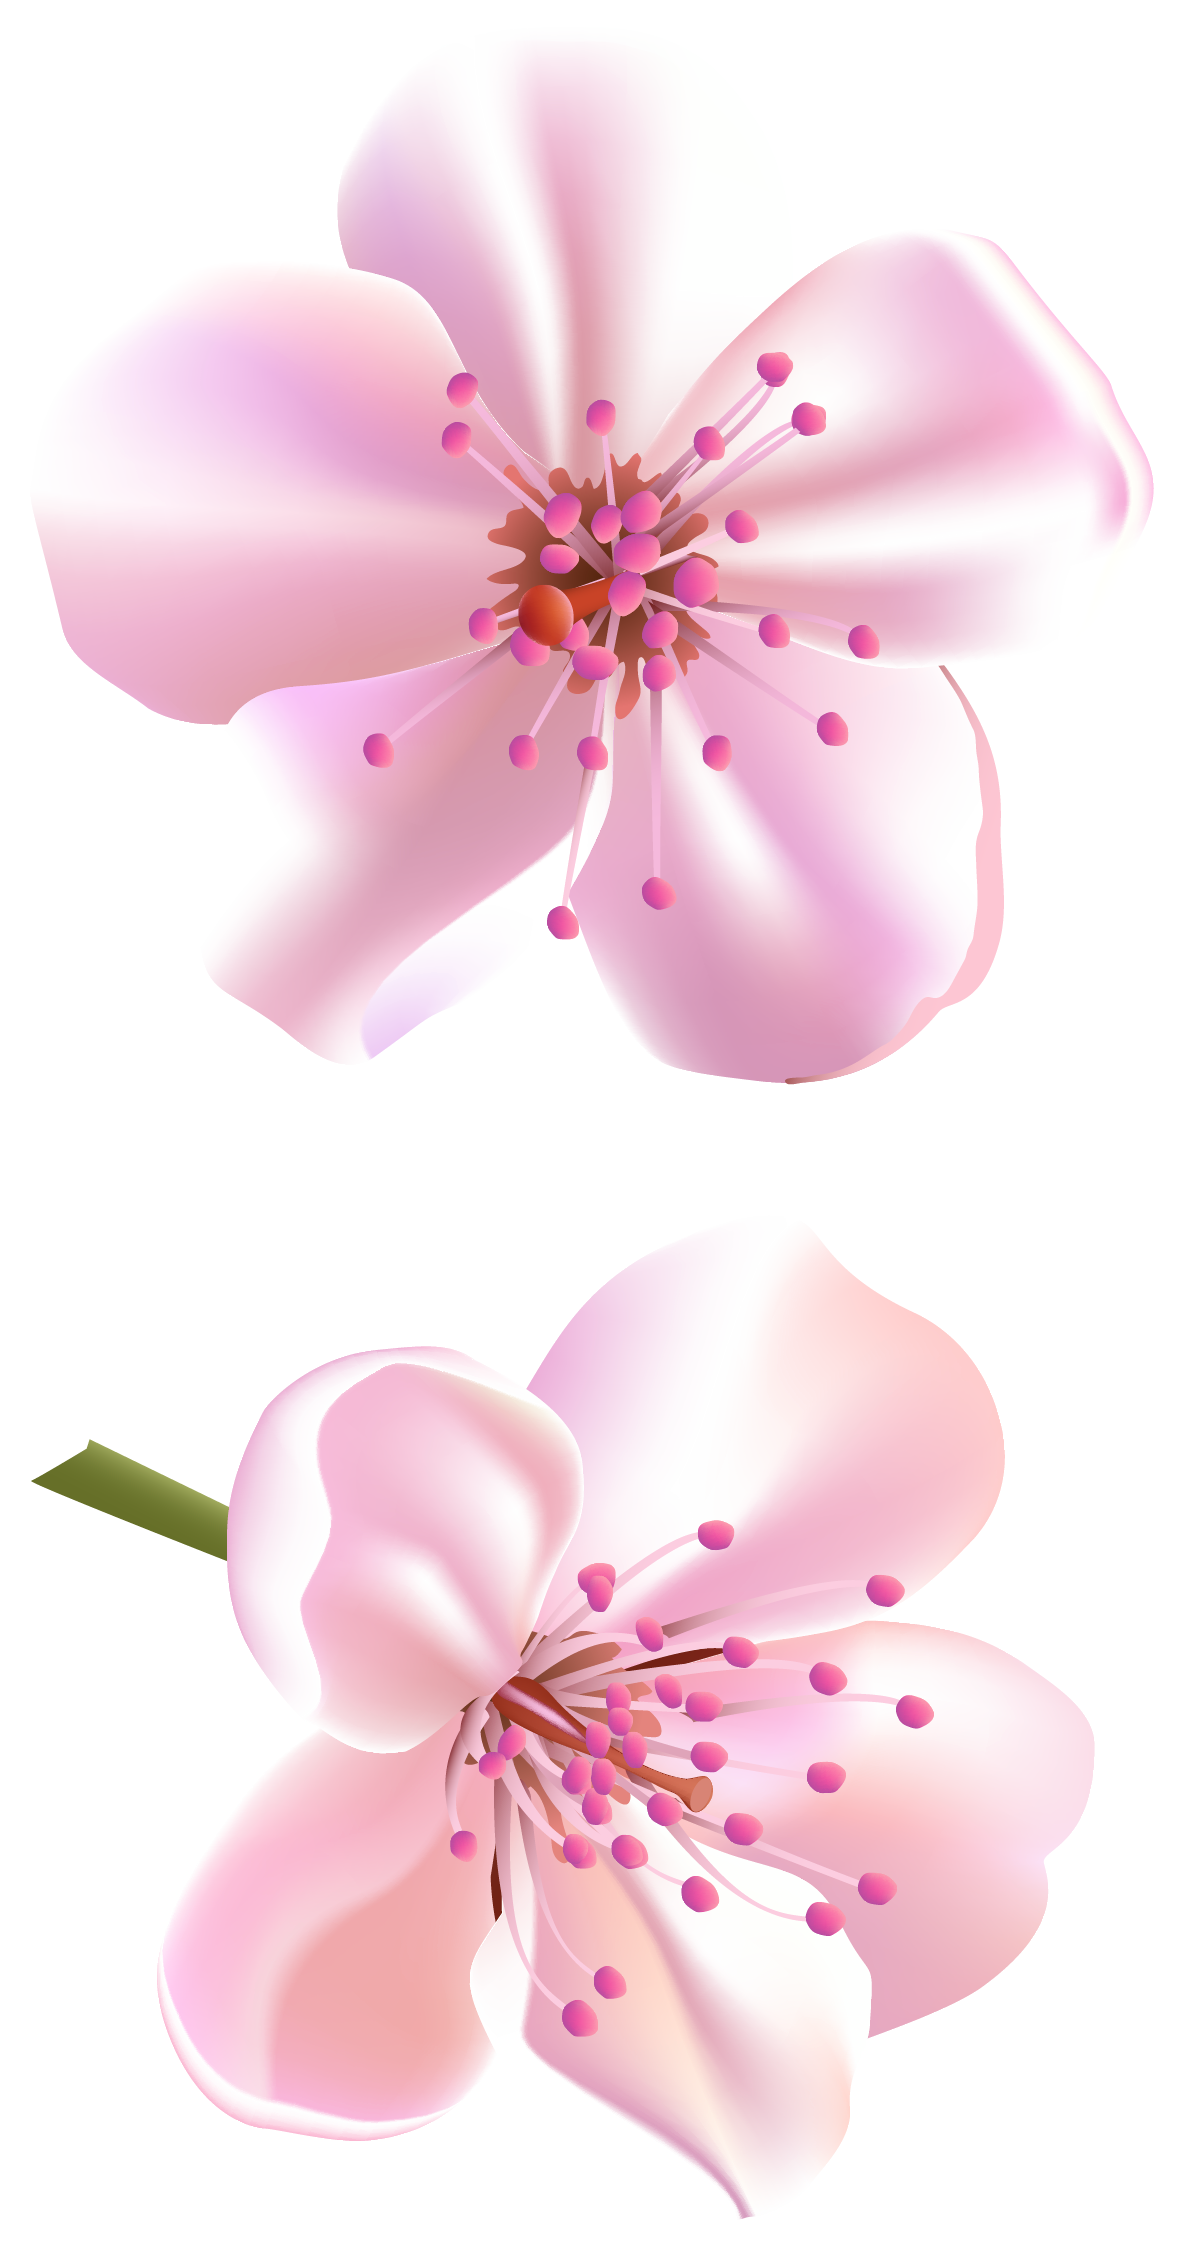 Blossom Vector Flower Free Download Image PNG Image